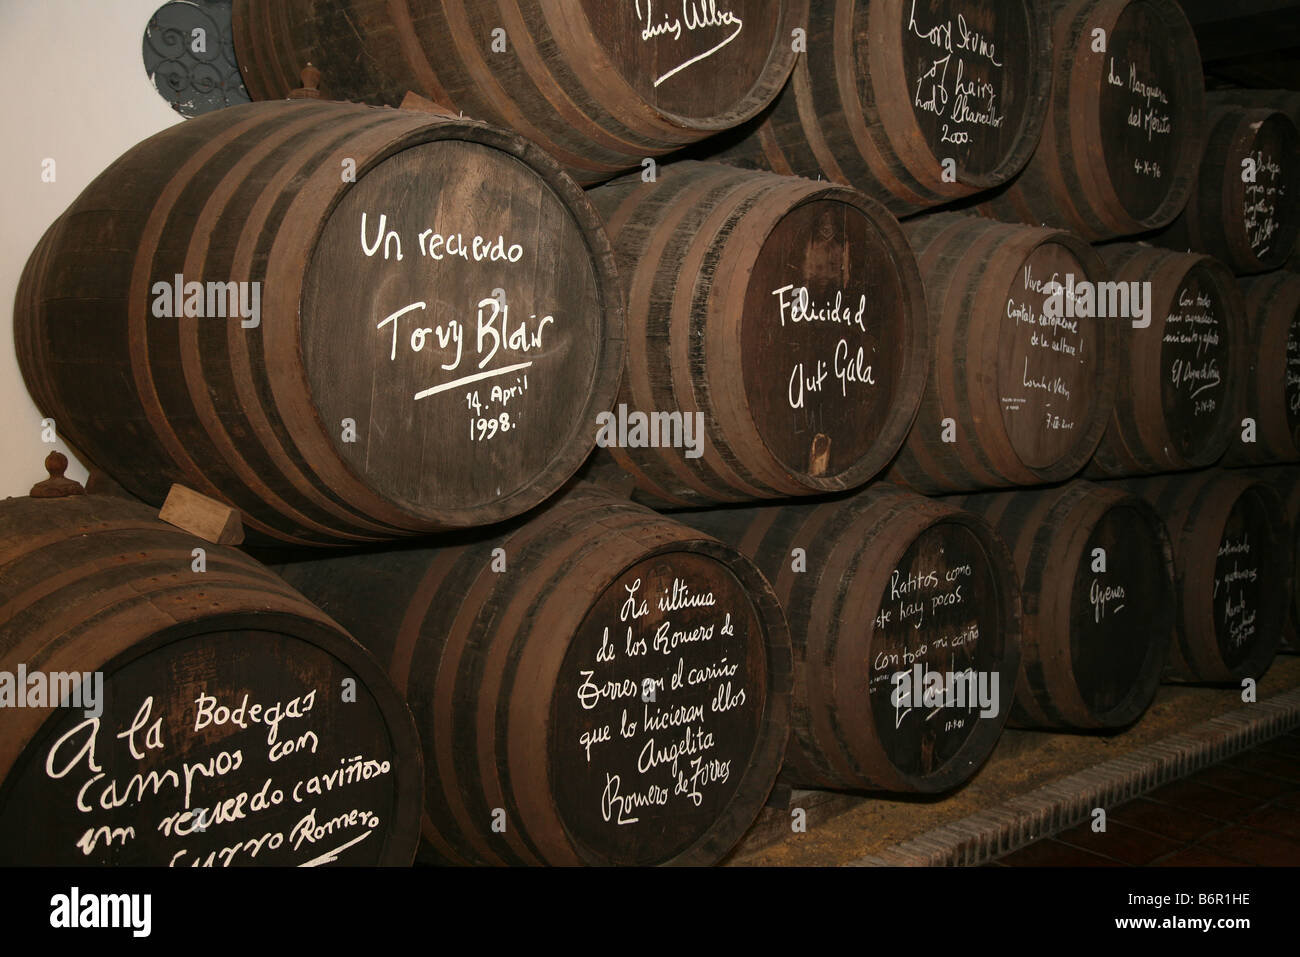 Barrels at the famous Bodegas Campos, Cordoba Stock Photo